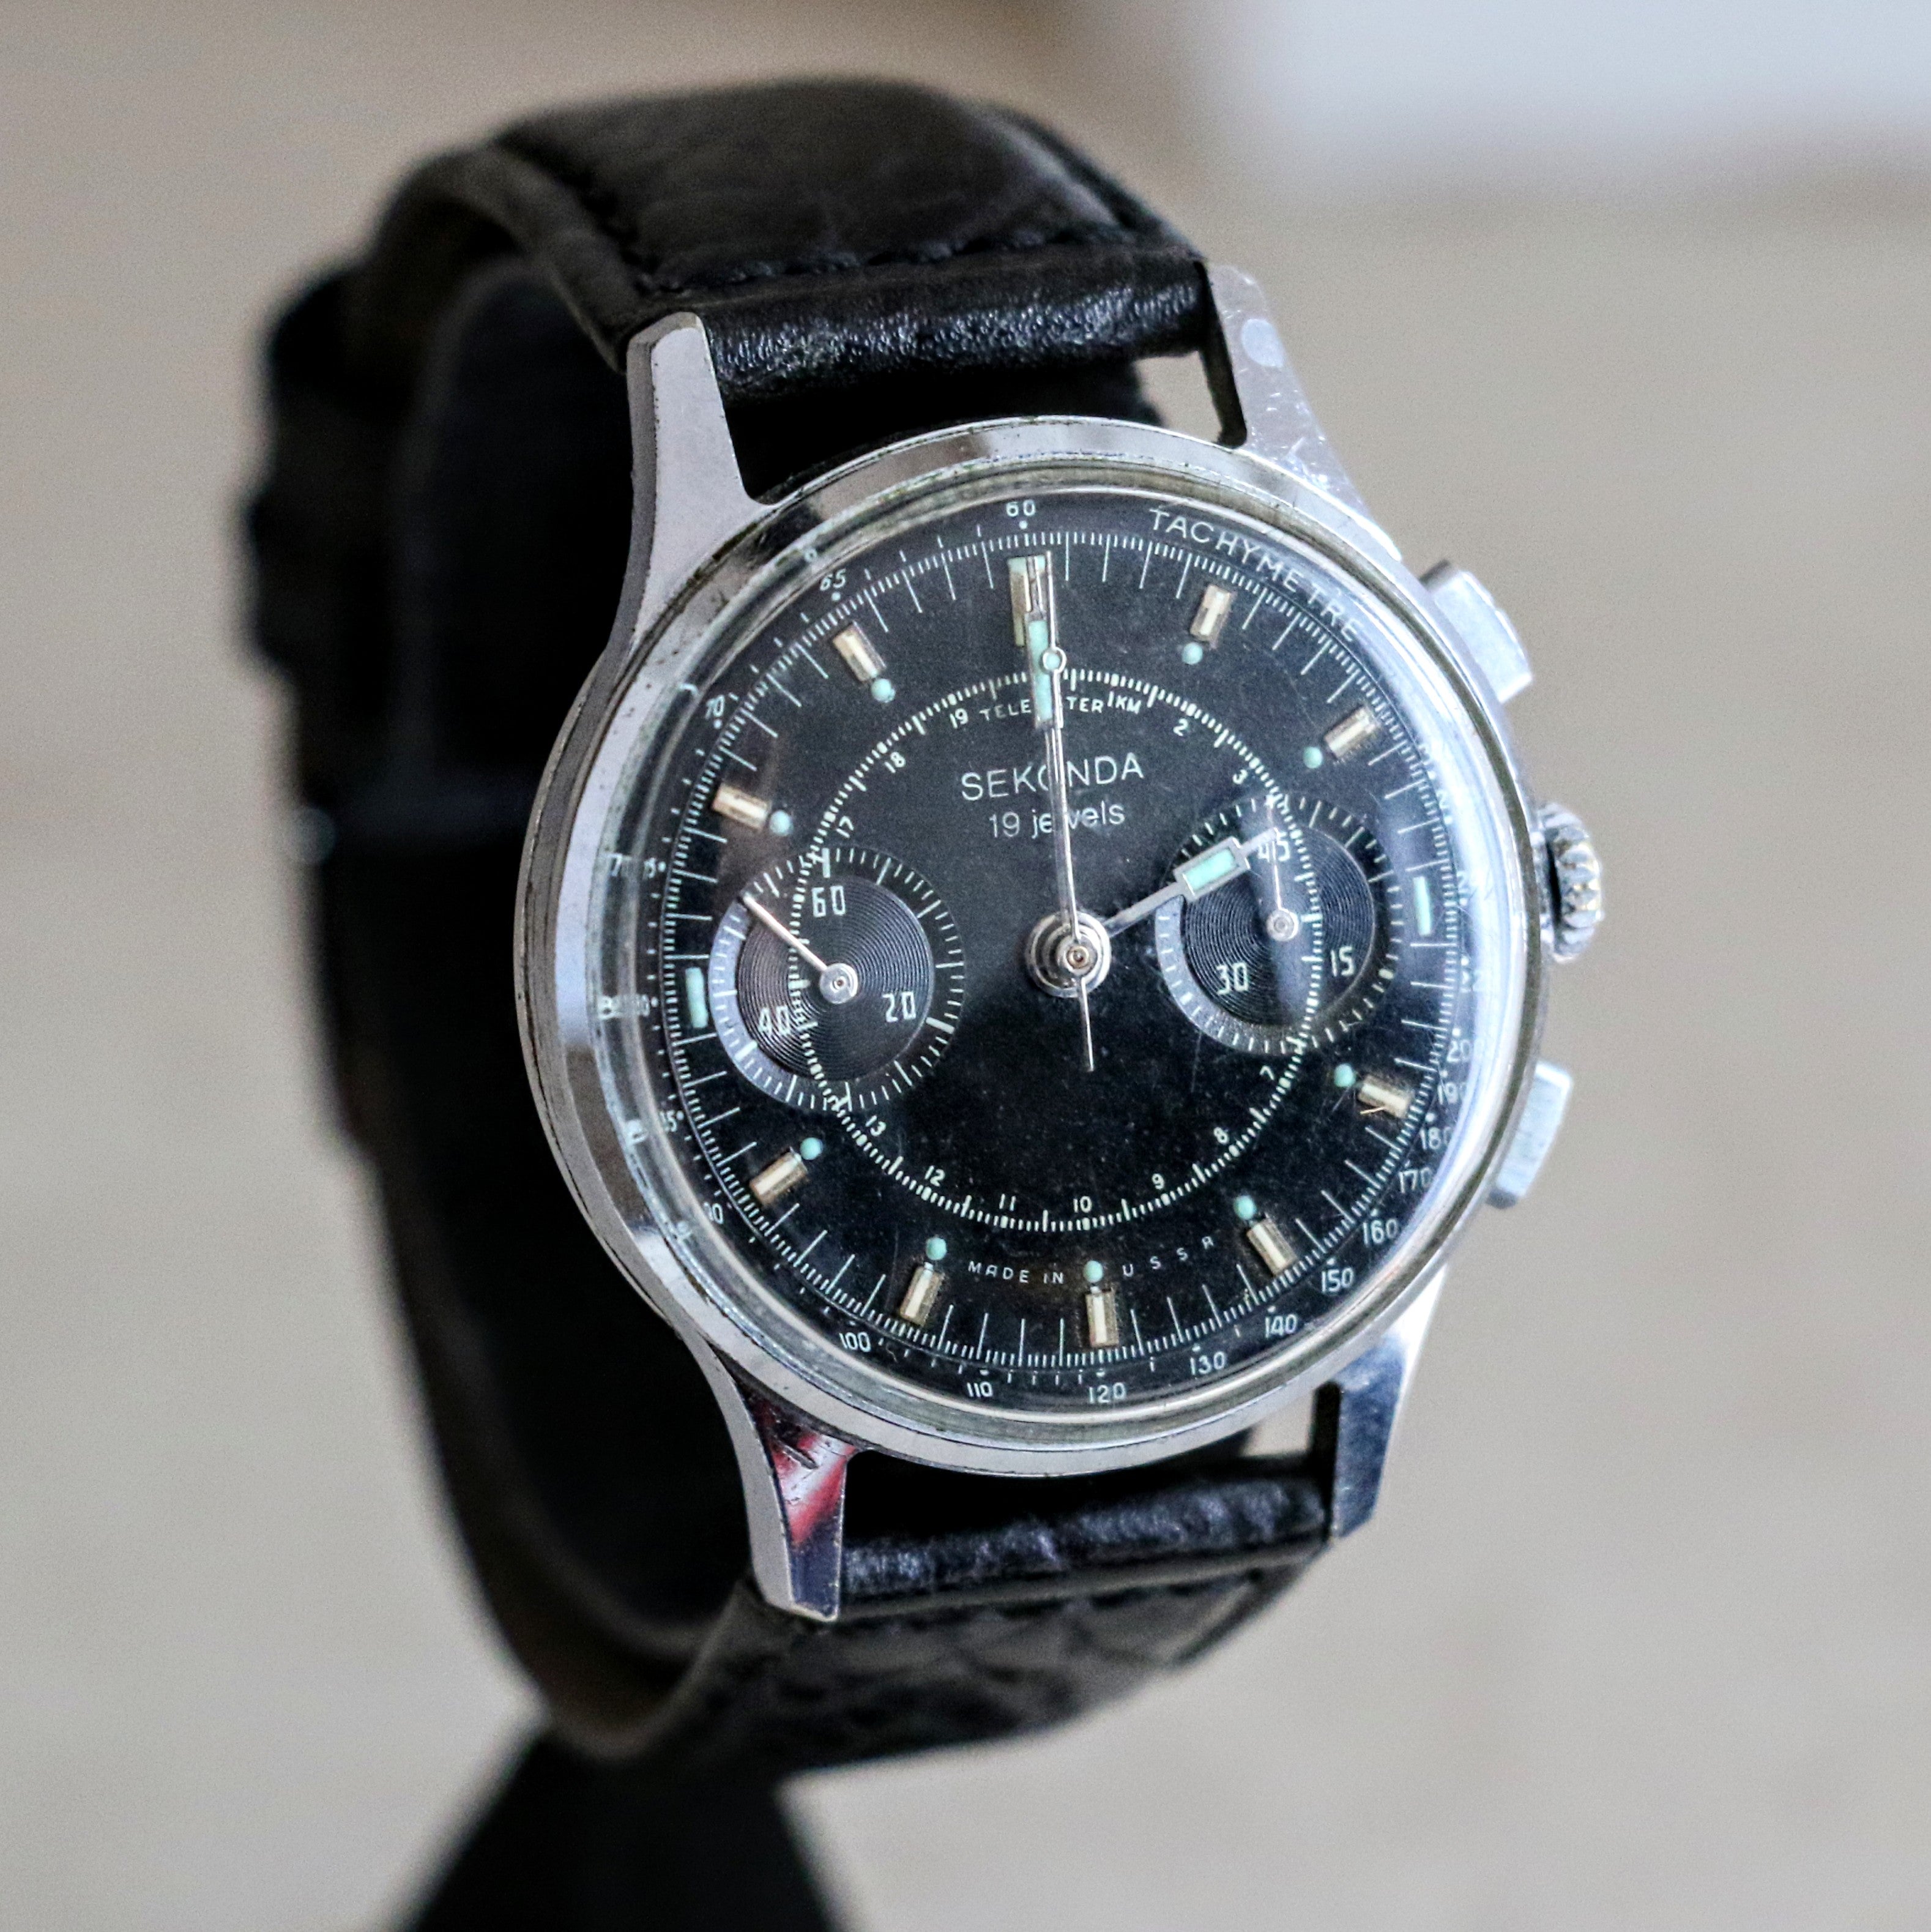 SEKONDA Poljot Chronograph Wristwatch 19 Jewels Made in U.S.S.R. Watch